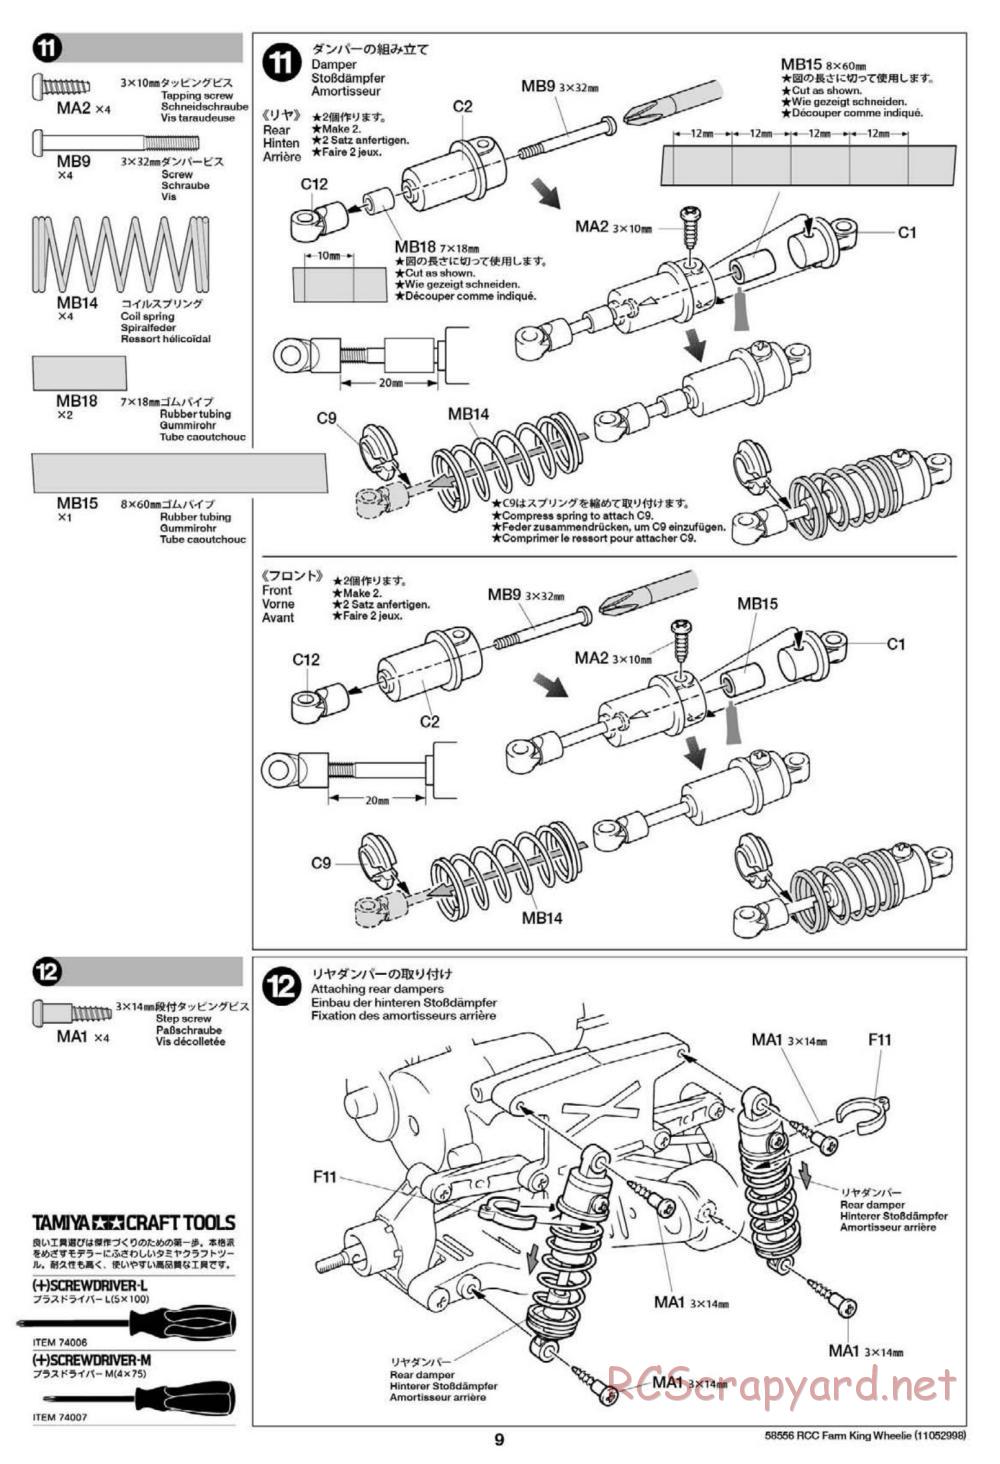 Tamiya - Farm King Wheelie Chassis - Manual - Page 9